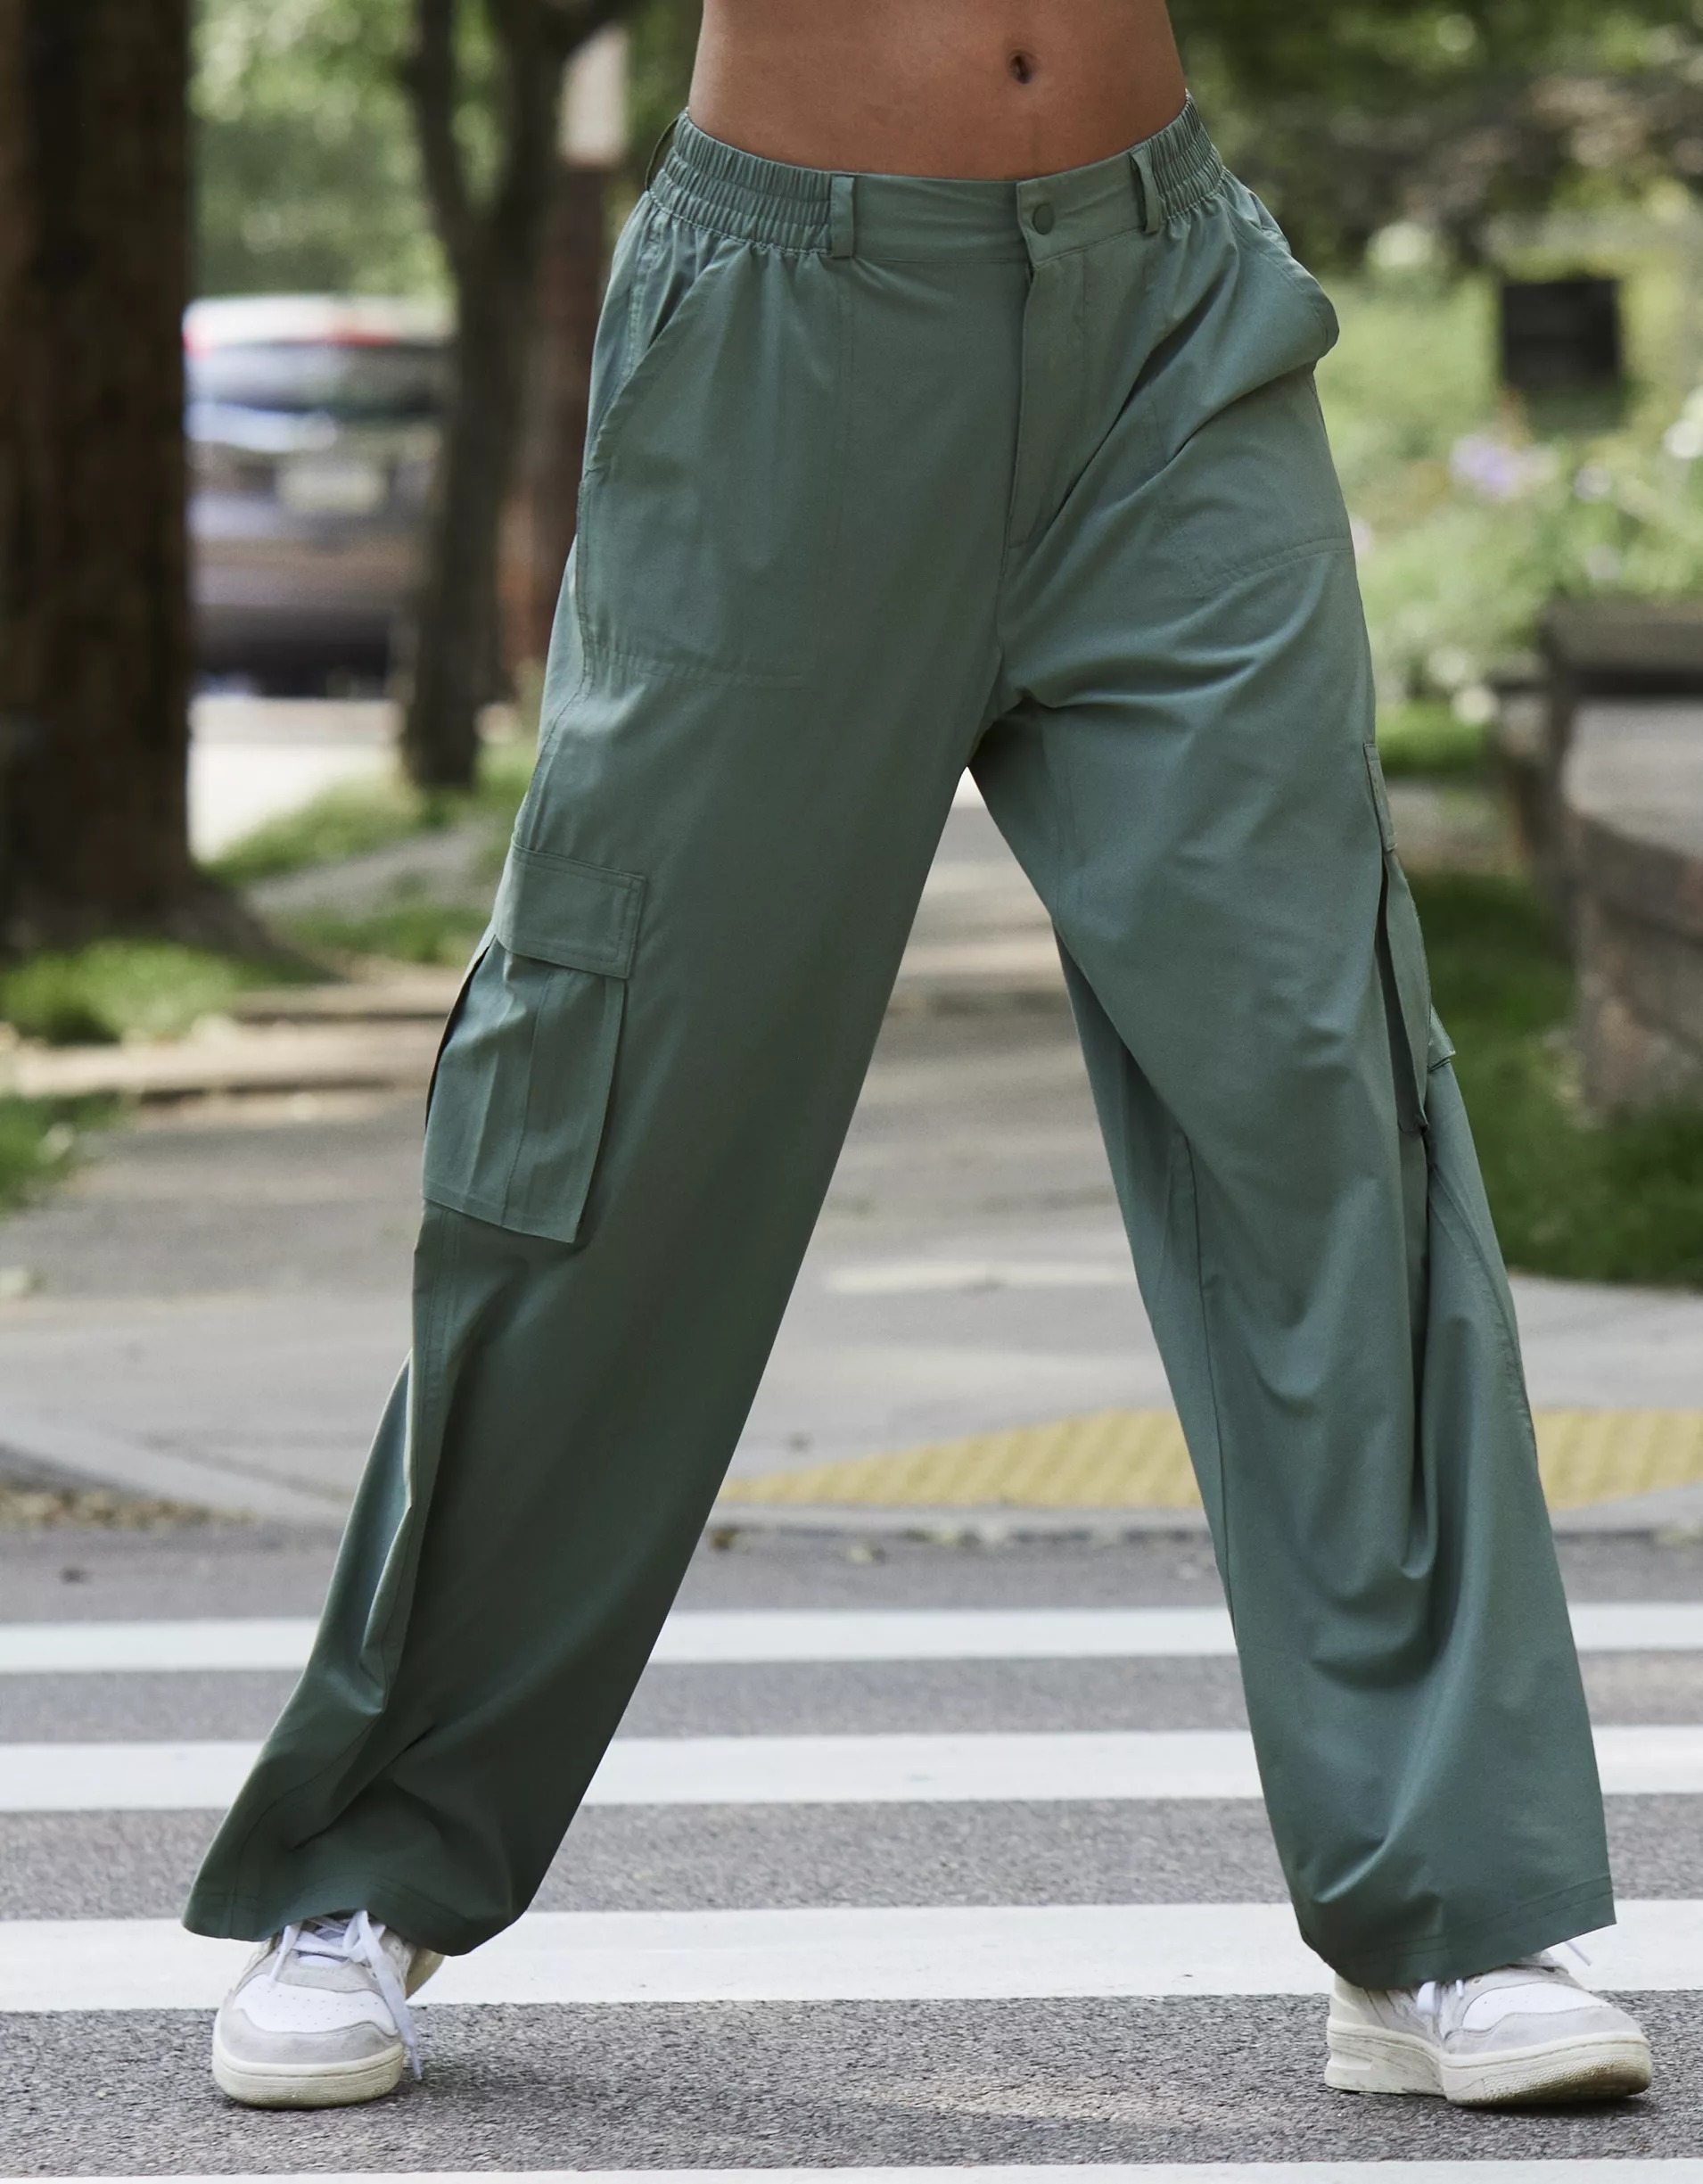 a model wearing the olive green pants on a crosswalk